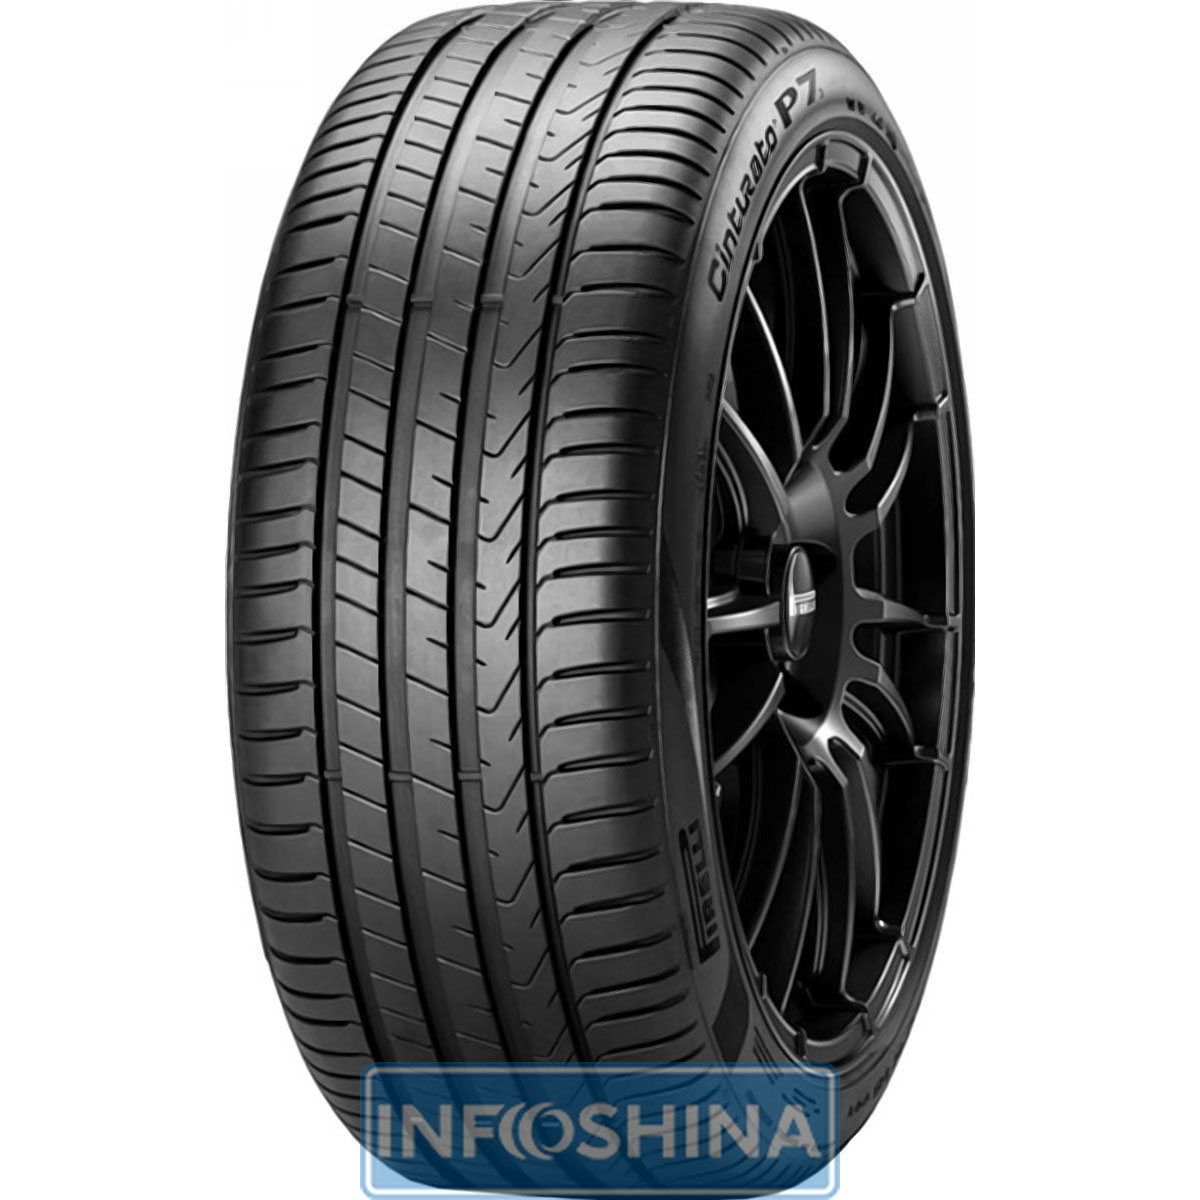 Купить шины Pirelli Cinturato P7 (P7C2) 205/55 R16 91V